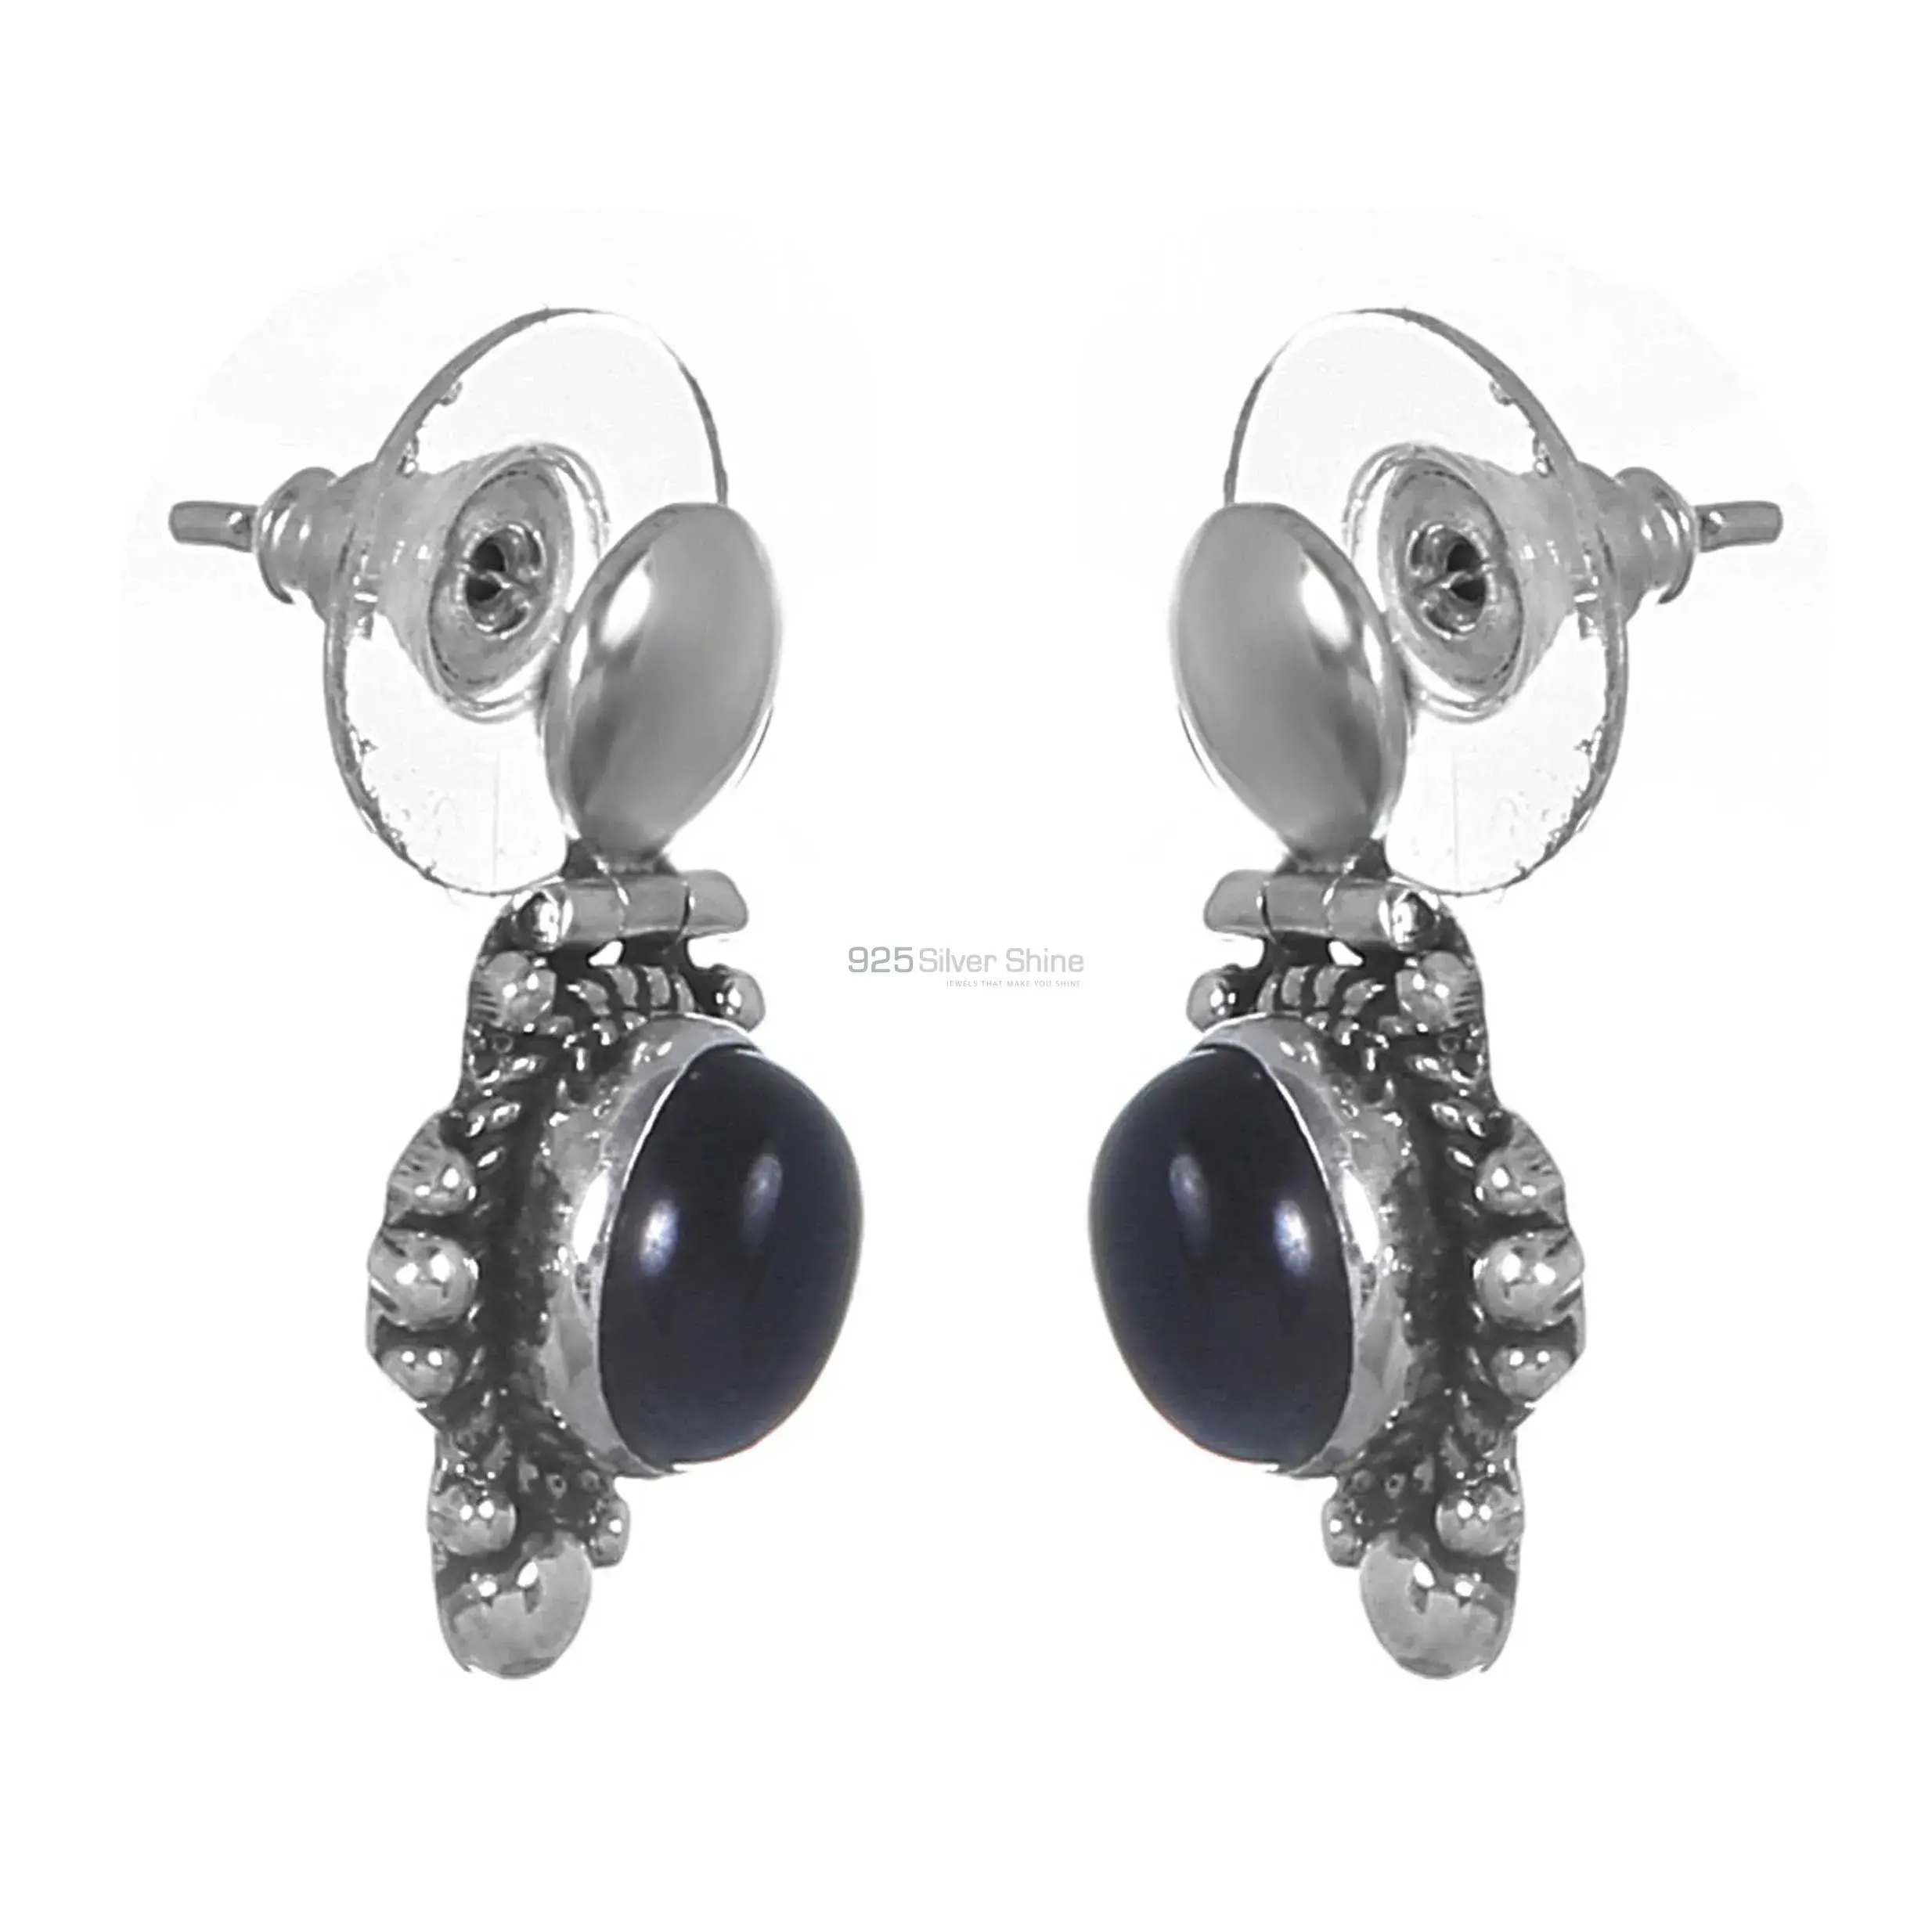 Genuine Black onyx Gemstone Earrings Suppliers In 925 Sterling Silver Jewelry 925SE258_0